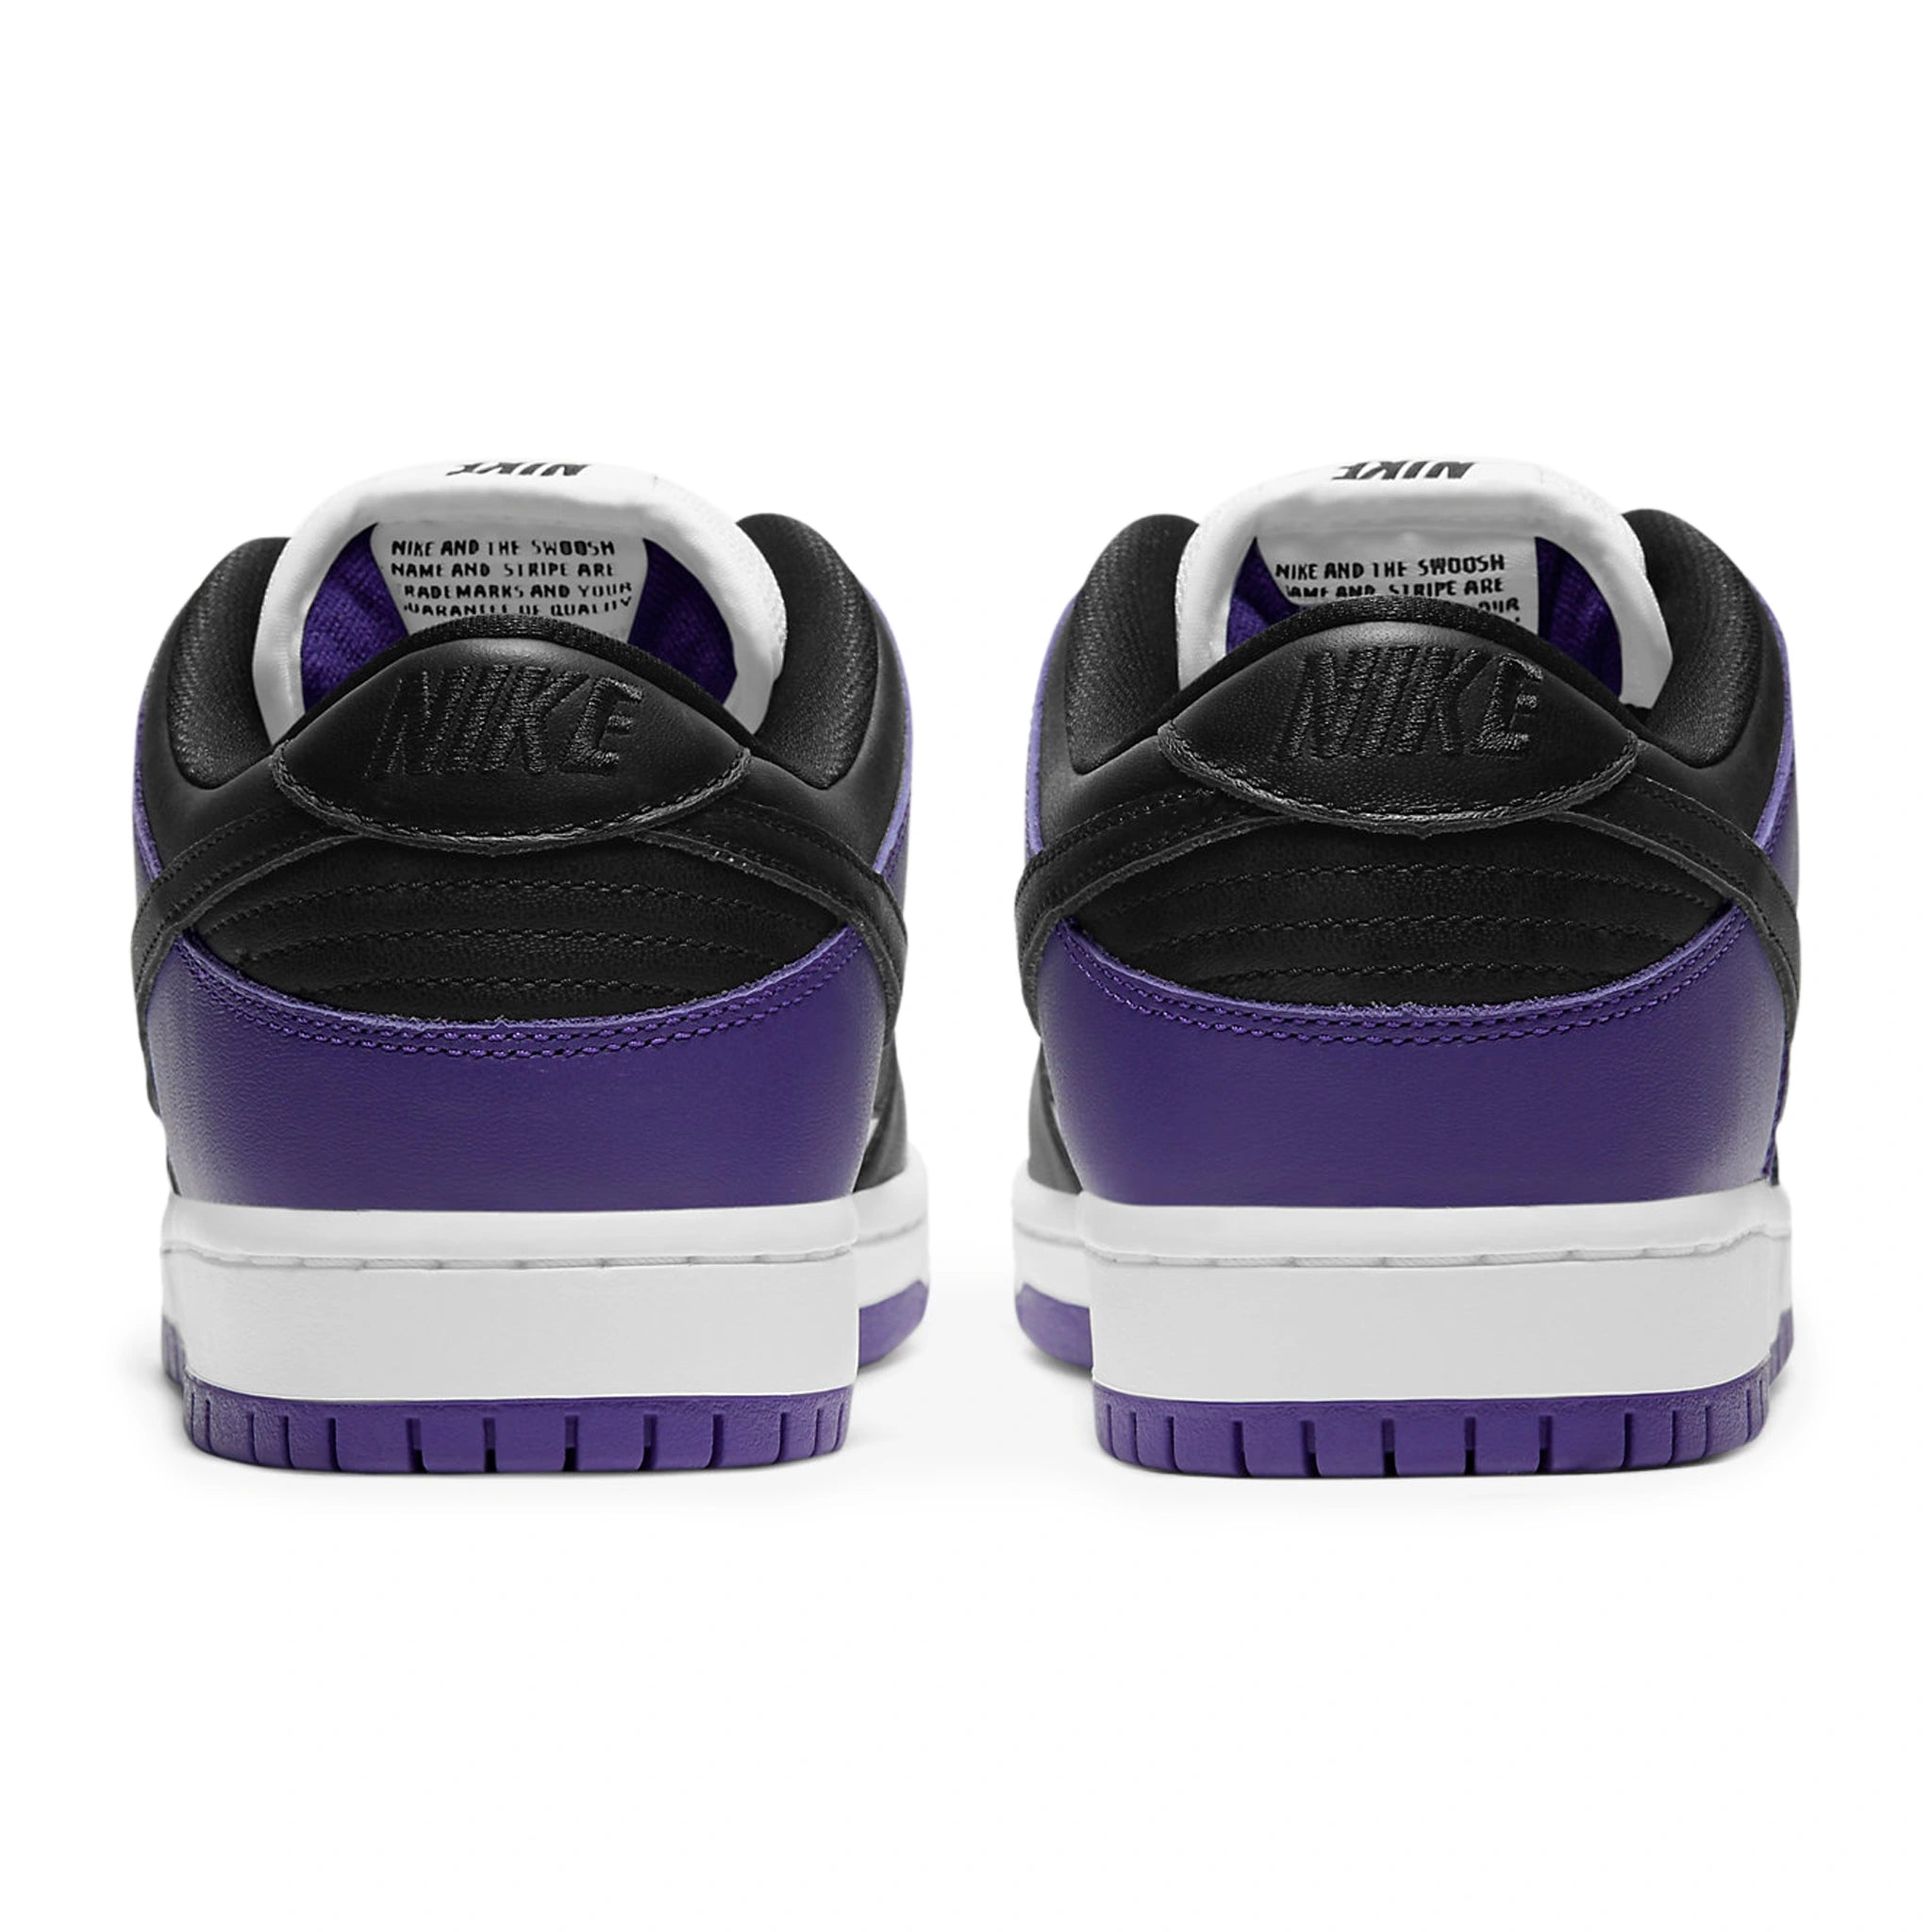 Back view of Nike SB Dunk Low Court Purple BQ6817-500